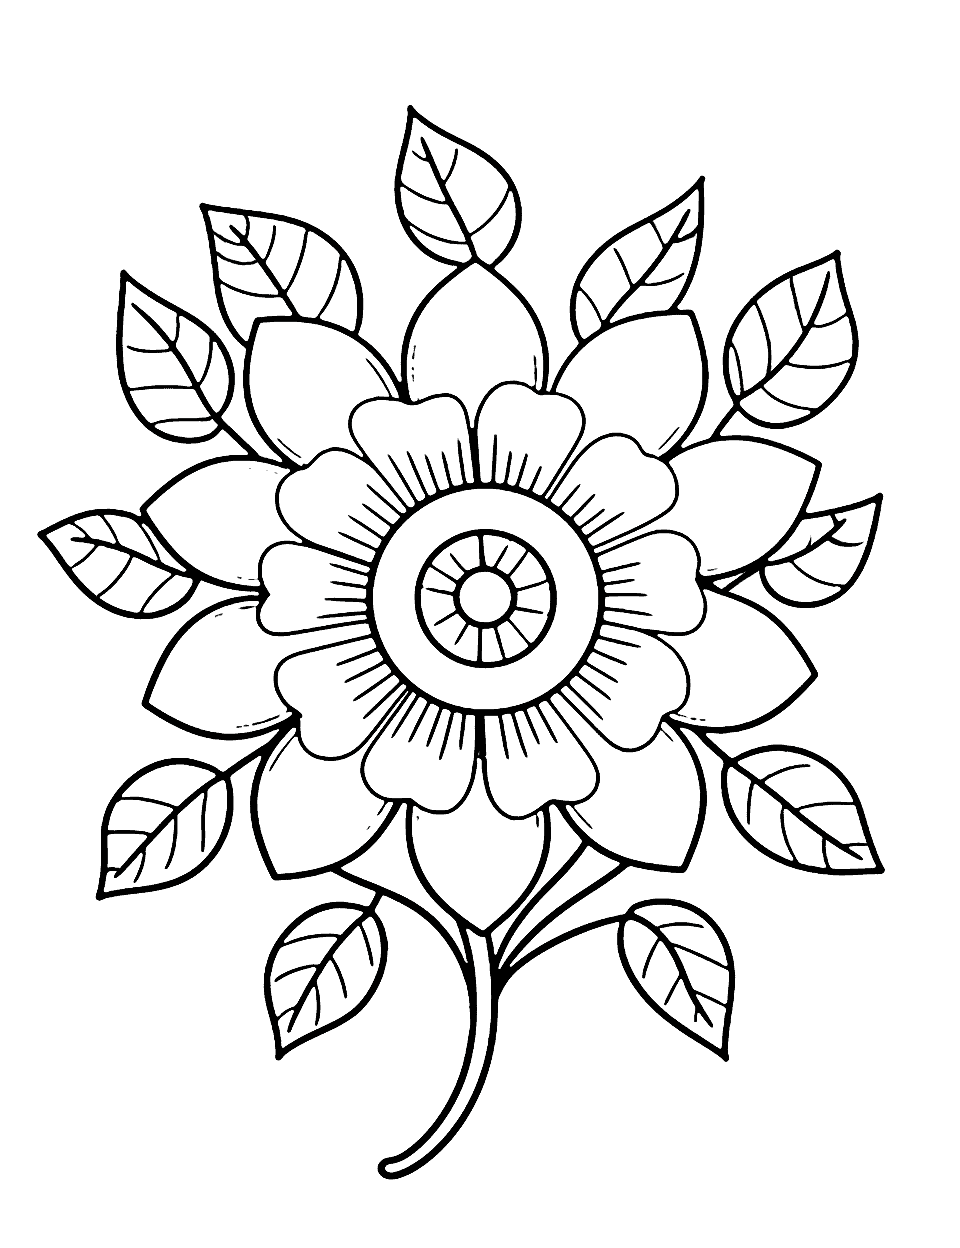 Simple Springtime Mandala Flower Coloring Page - A simple mandala with springtime flower motifs.